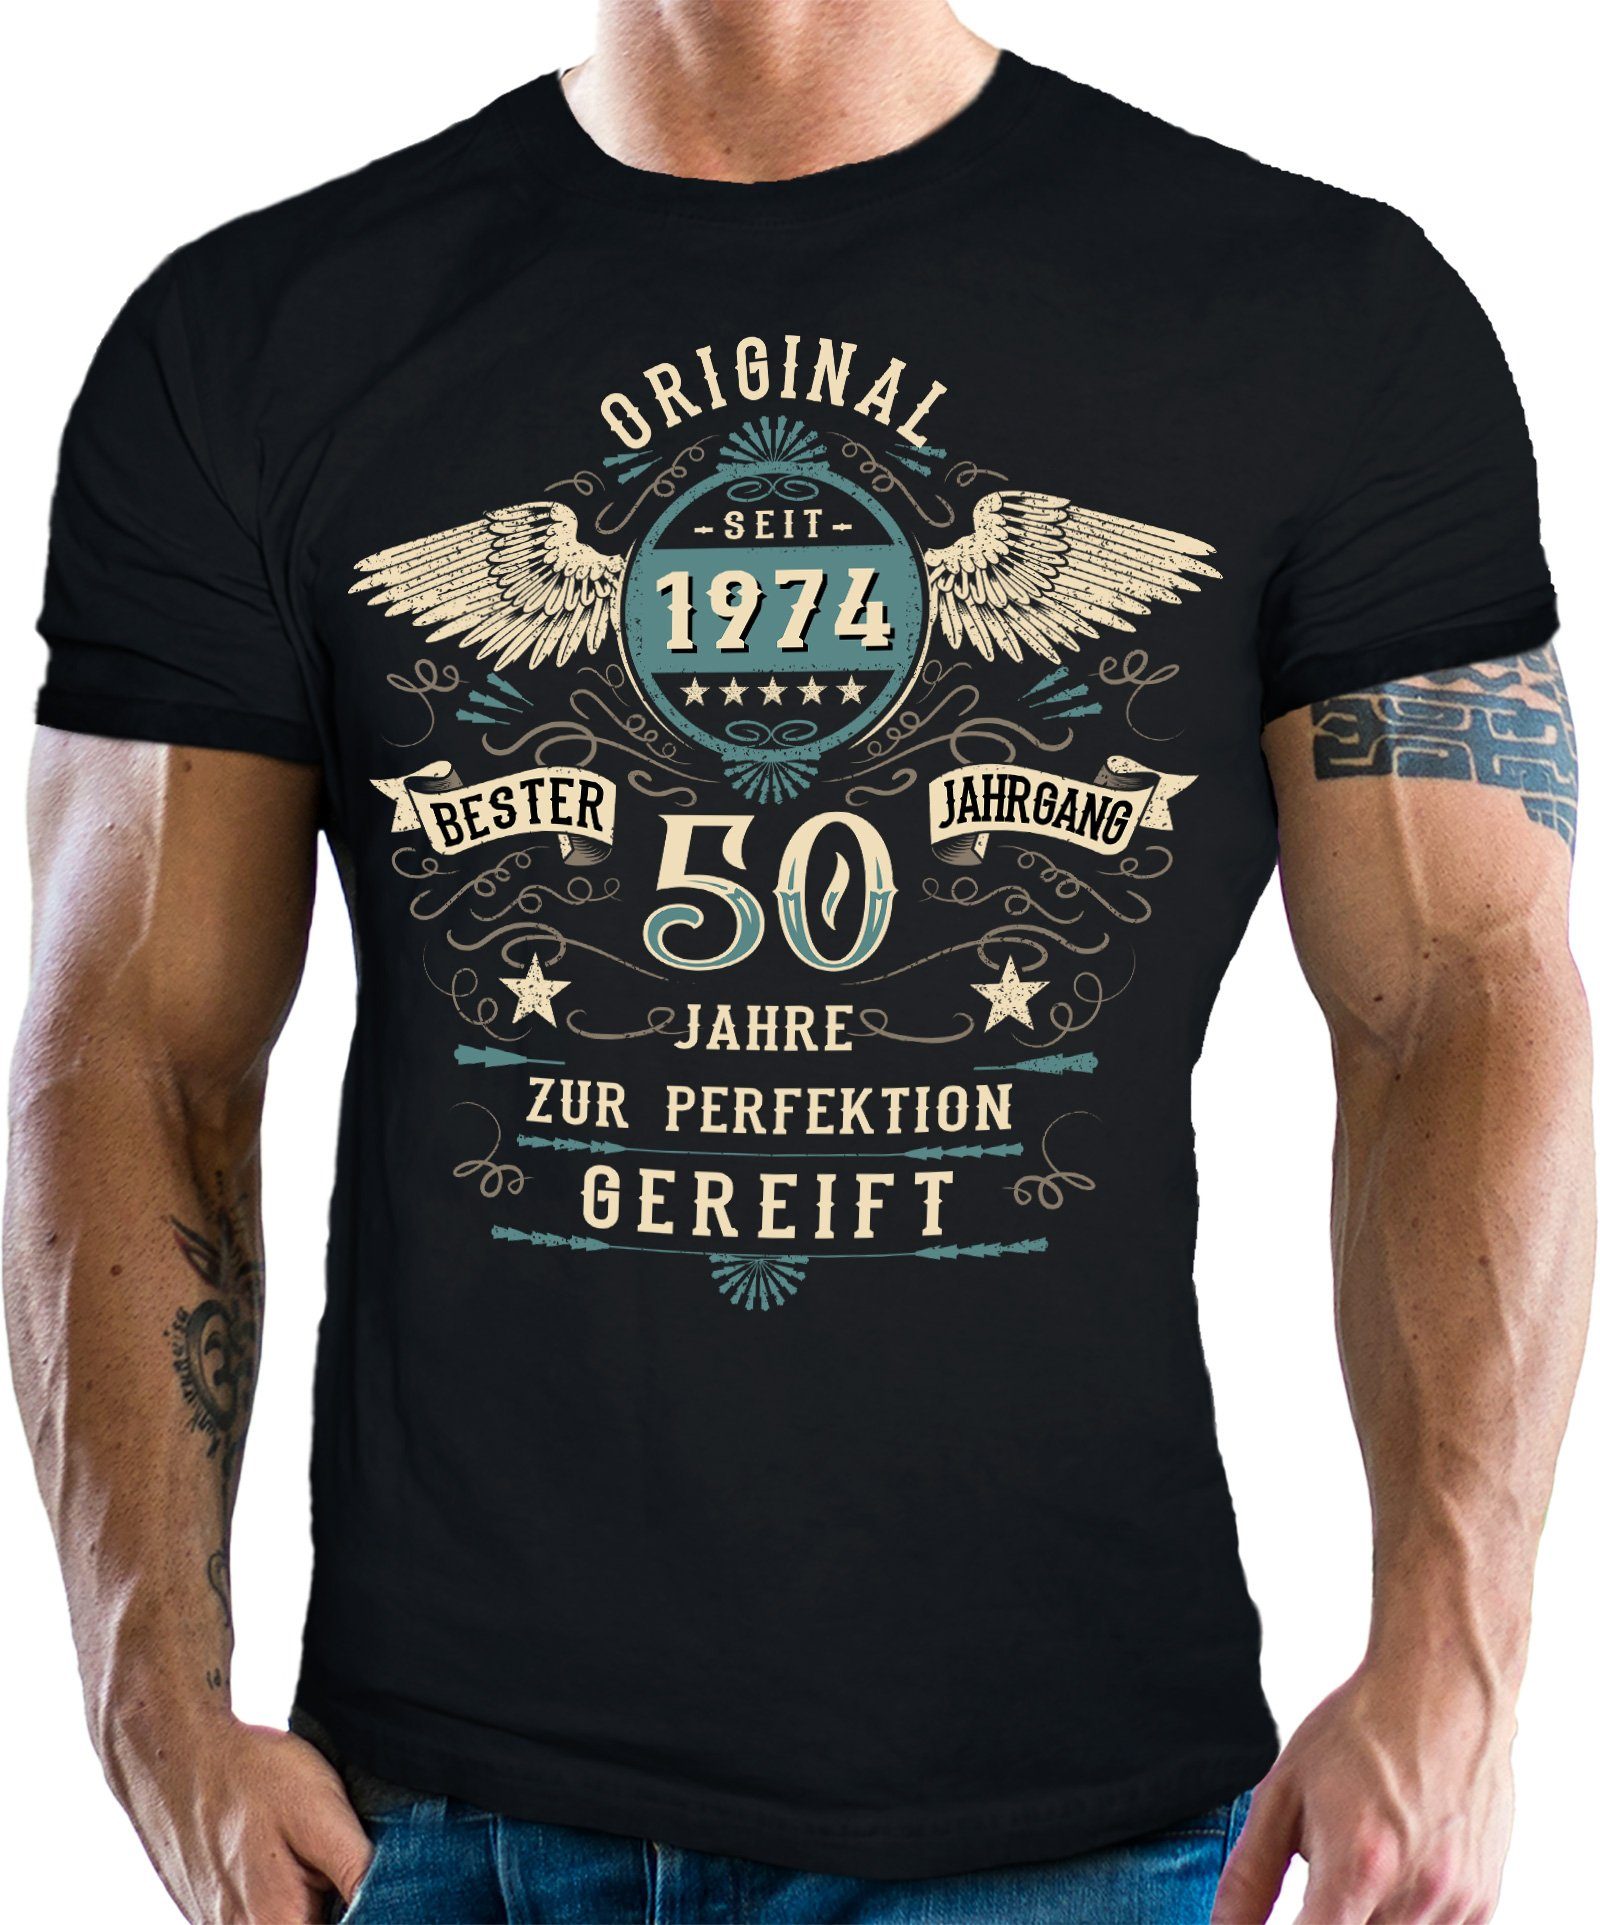 LOBO NEGRO® T-Shirt als Geschenk zum 50. Geburtstag: Original seit 1974